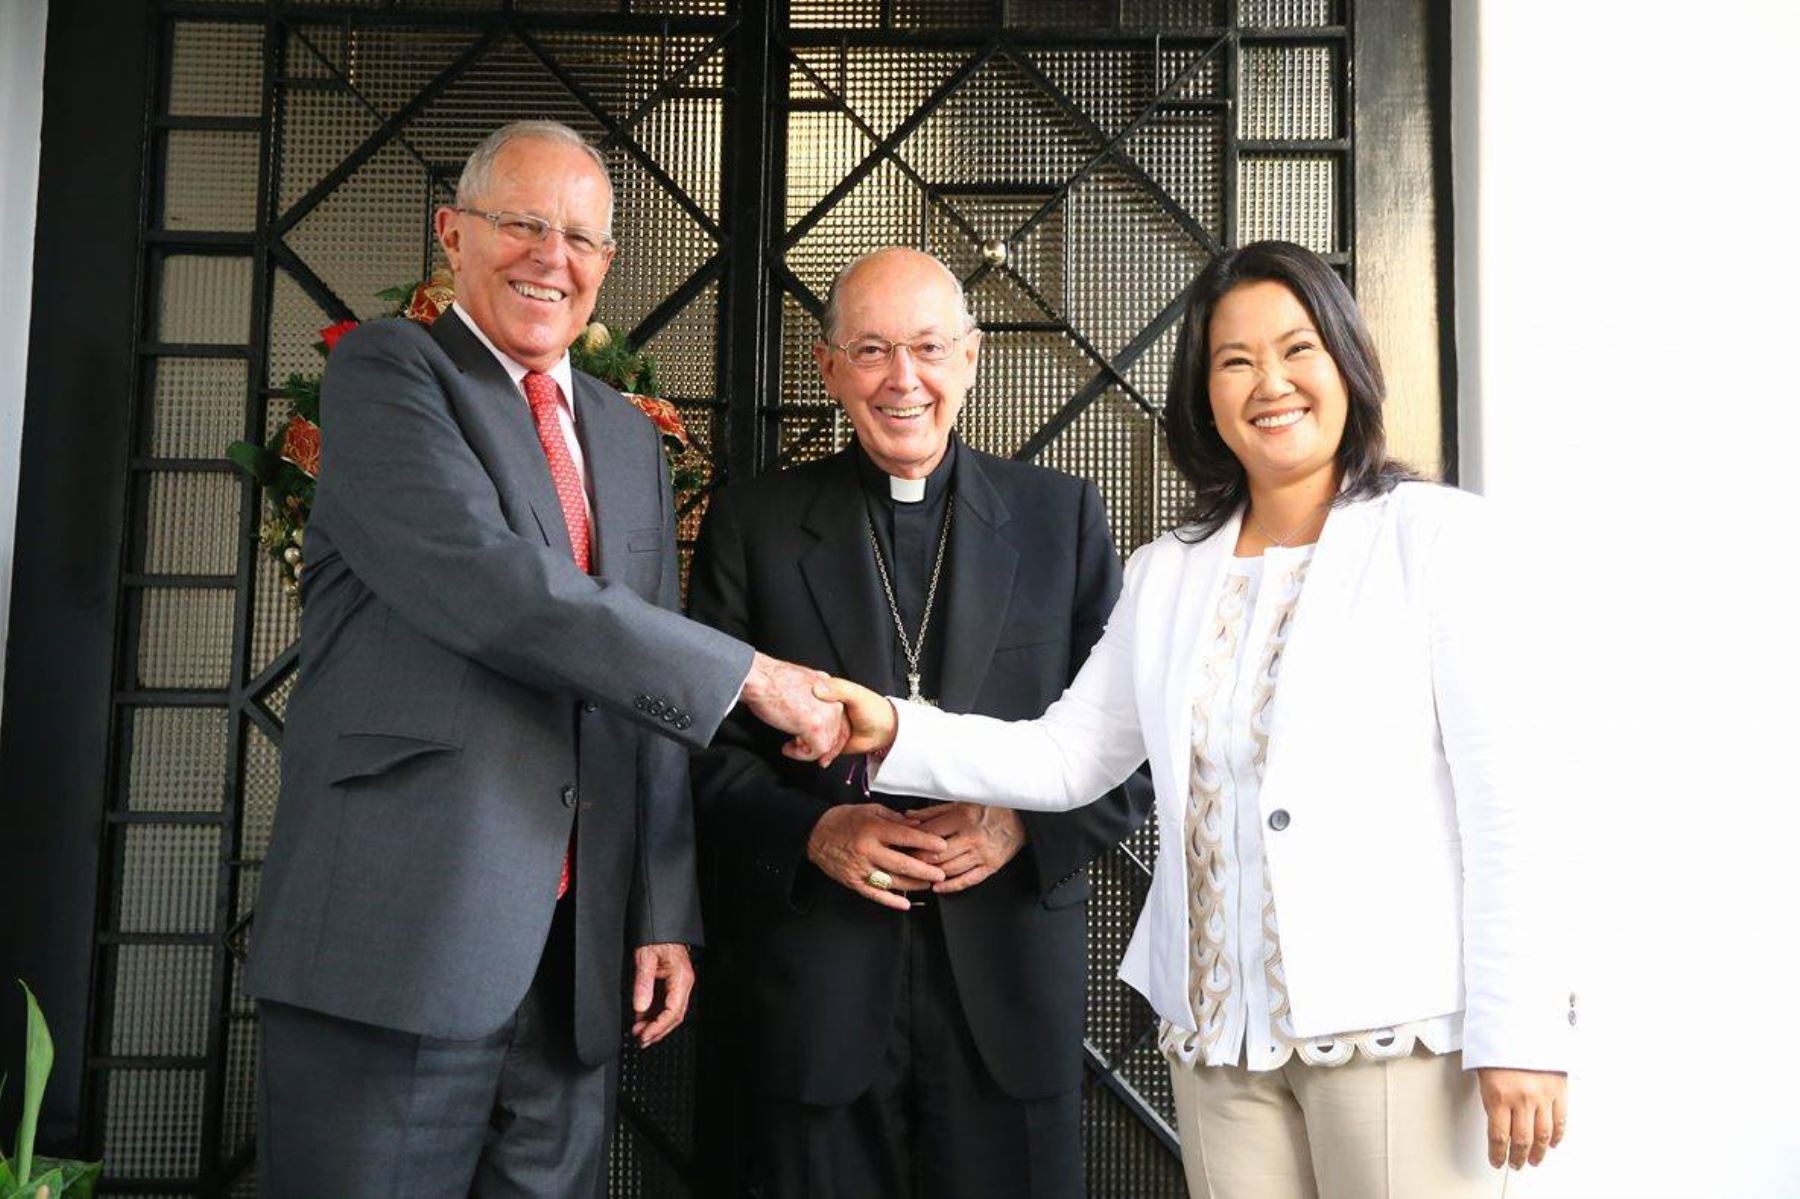 Fotografía de reunión entre Keiko Fujimori, Pedro Pablo Kuczysnki y Juan Luis Cipriani.